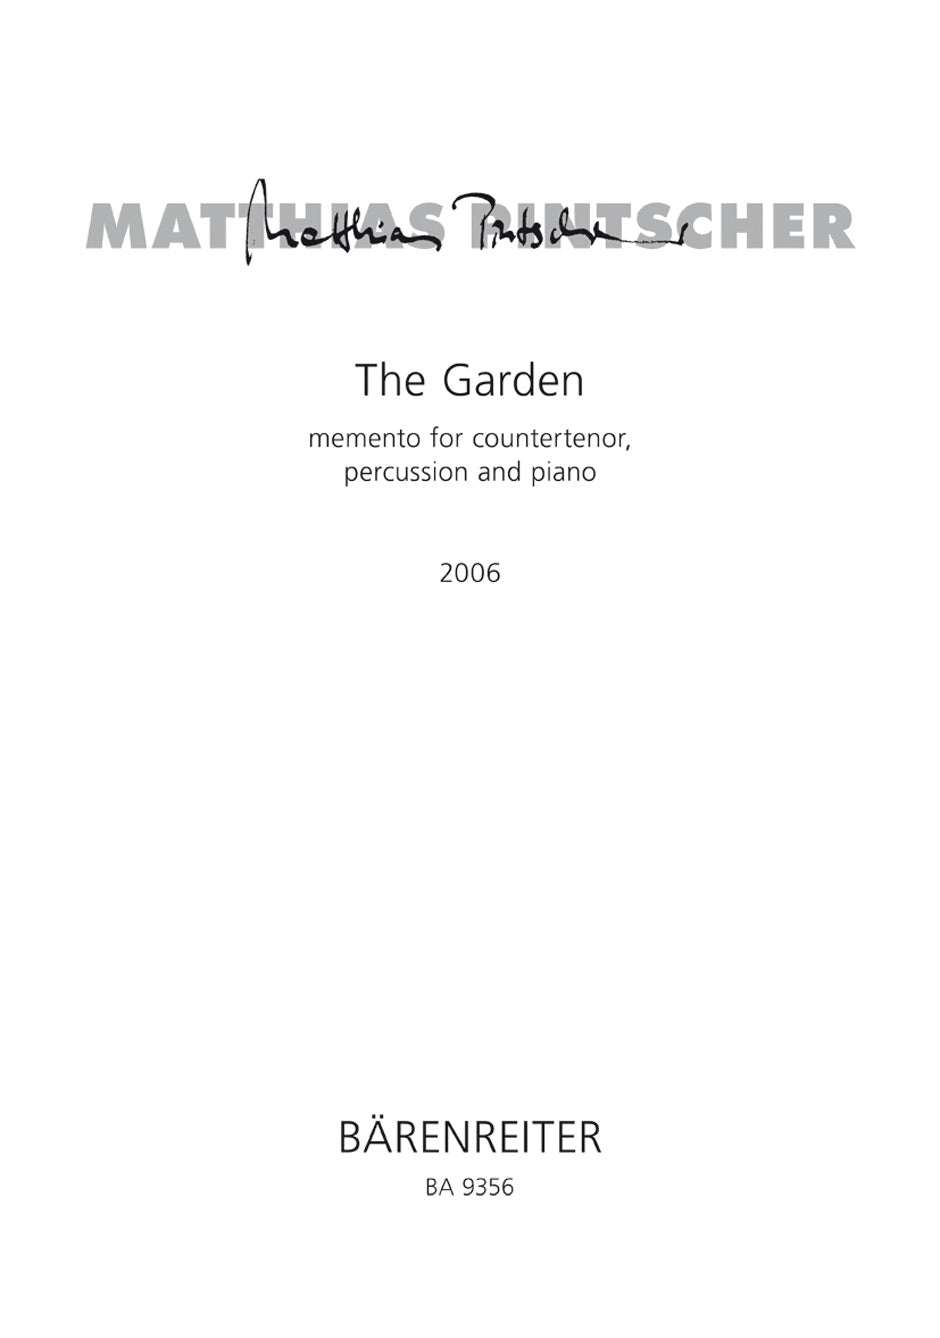 Pintscher: The Garden